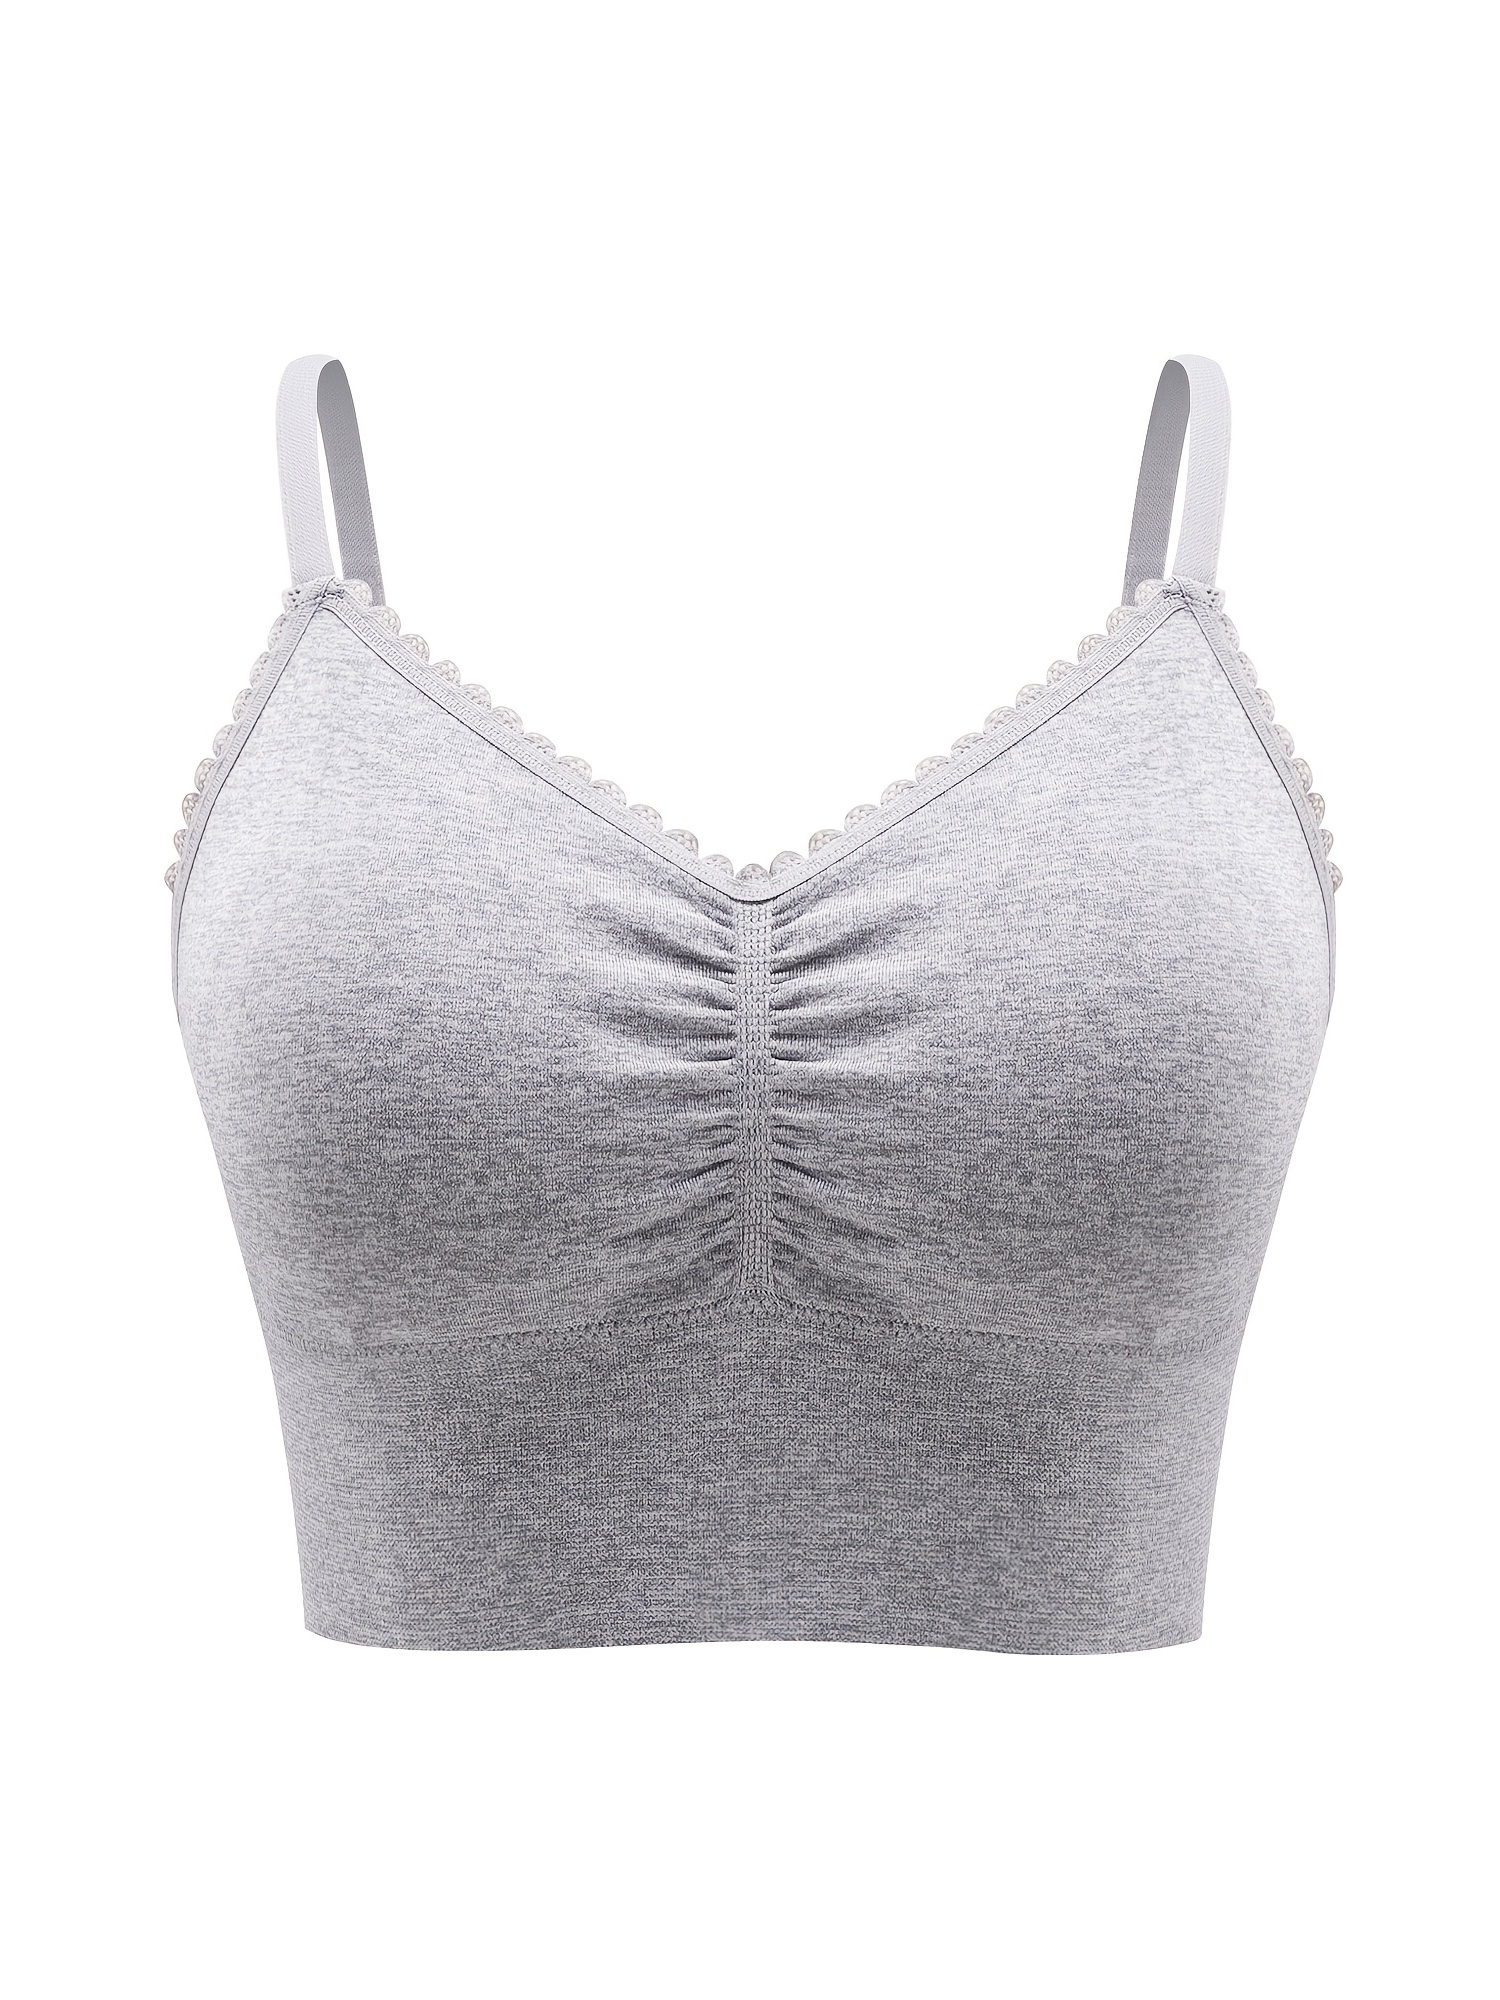 Women's Bra Wirefree Cotton Bra, Sleeping Underwear Soft Cup Plus Size Bra  Full Coverage Bralette (Color : Gray, Size : 46D)